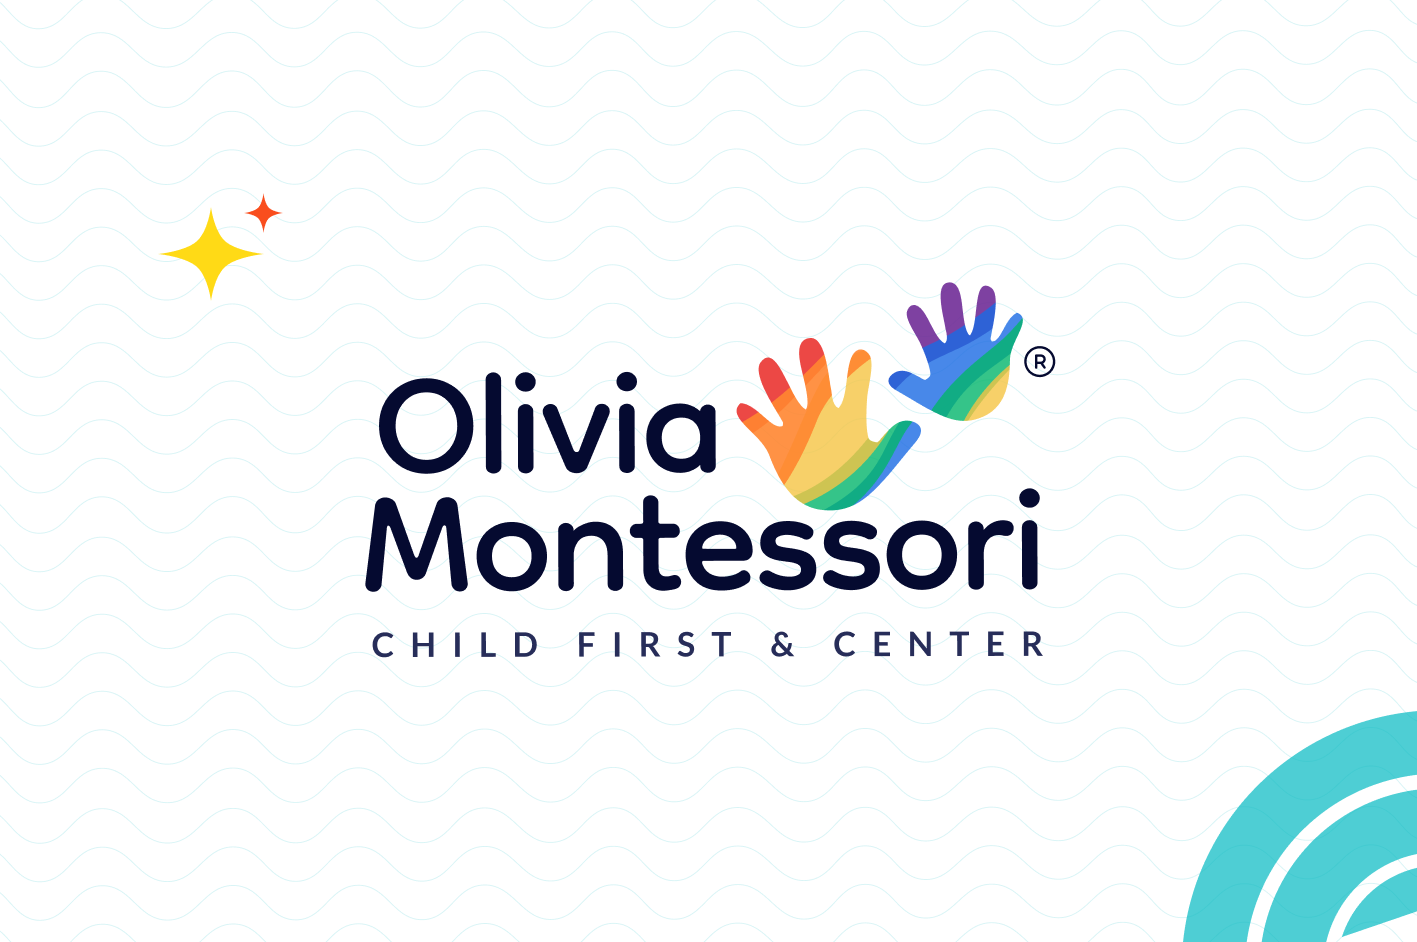 Olivia Montessori, Best Preschool in Bengaluru - Logo Design and Website Design and Development Services Showcase